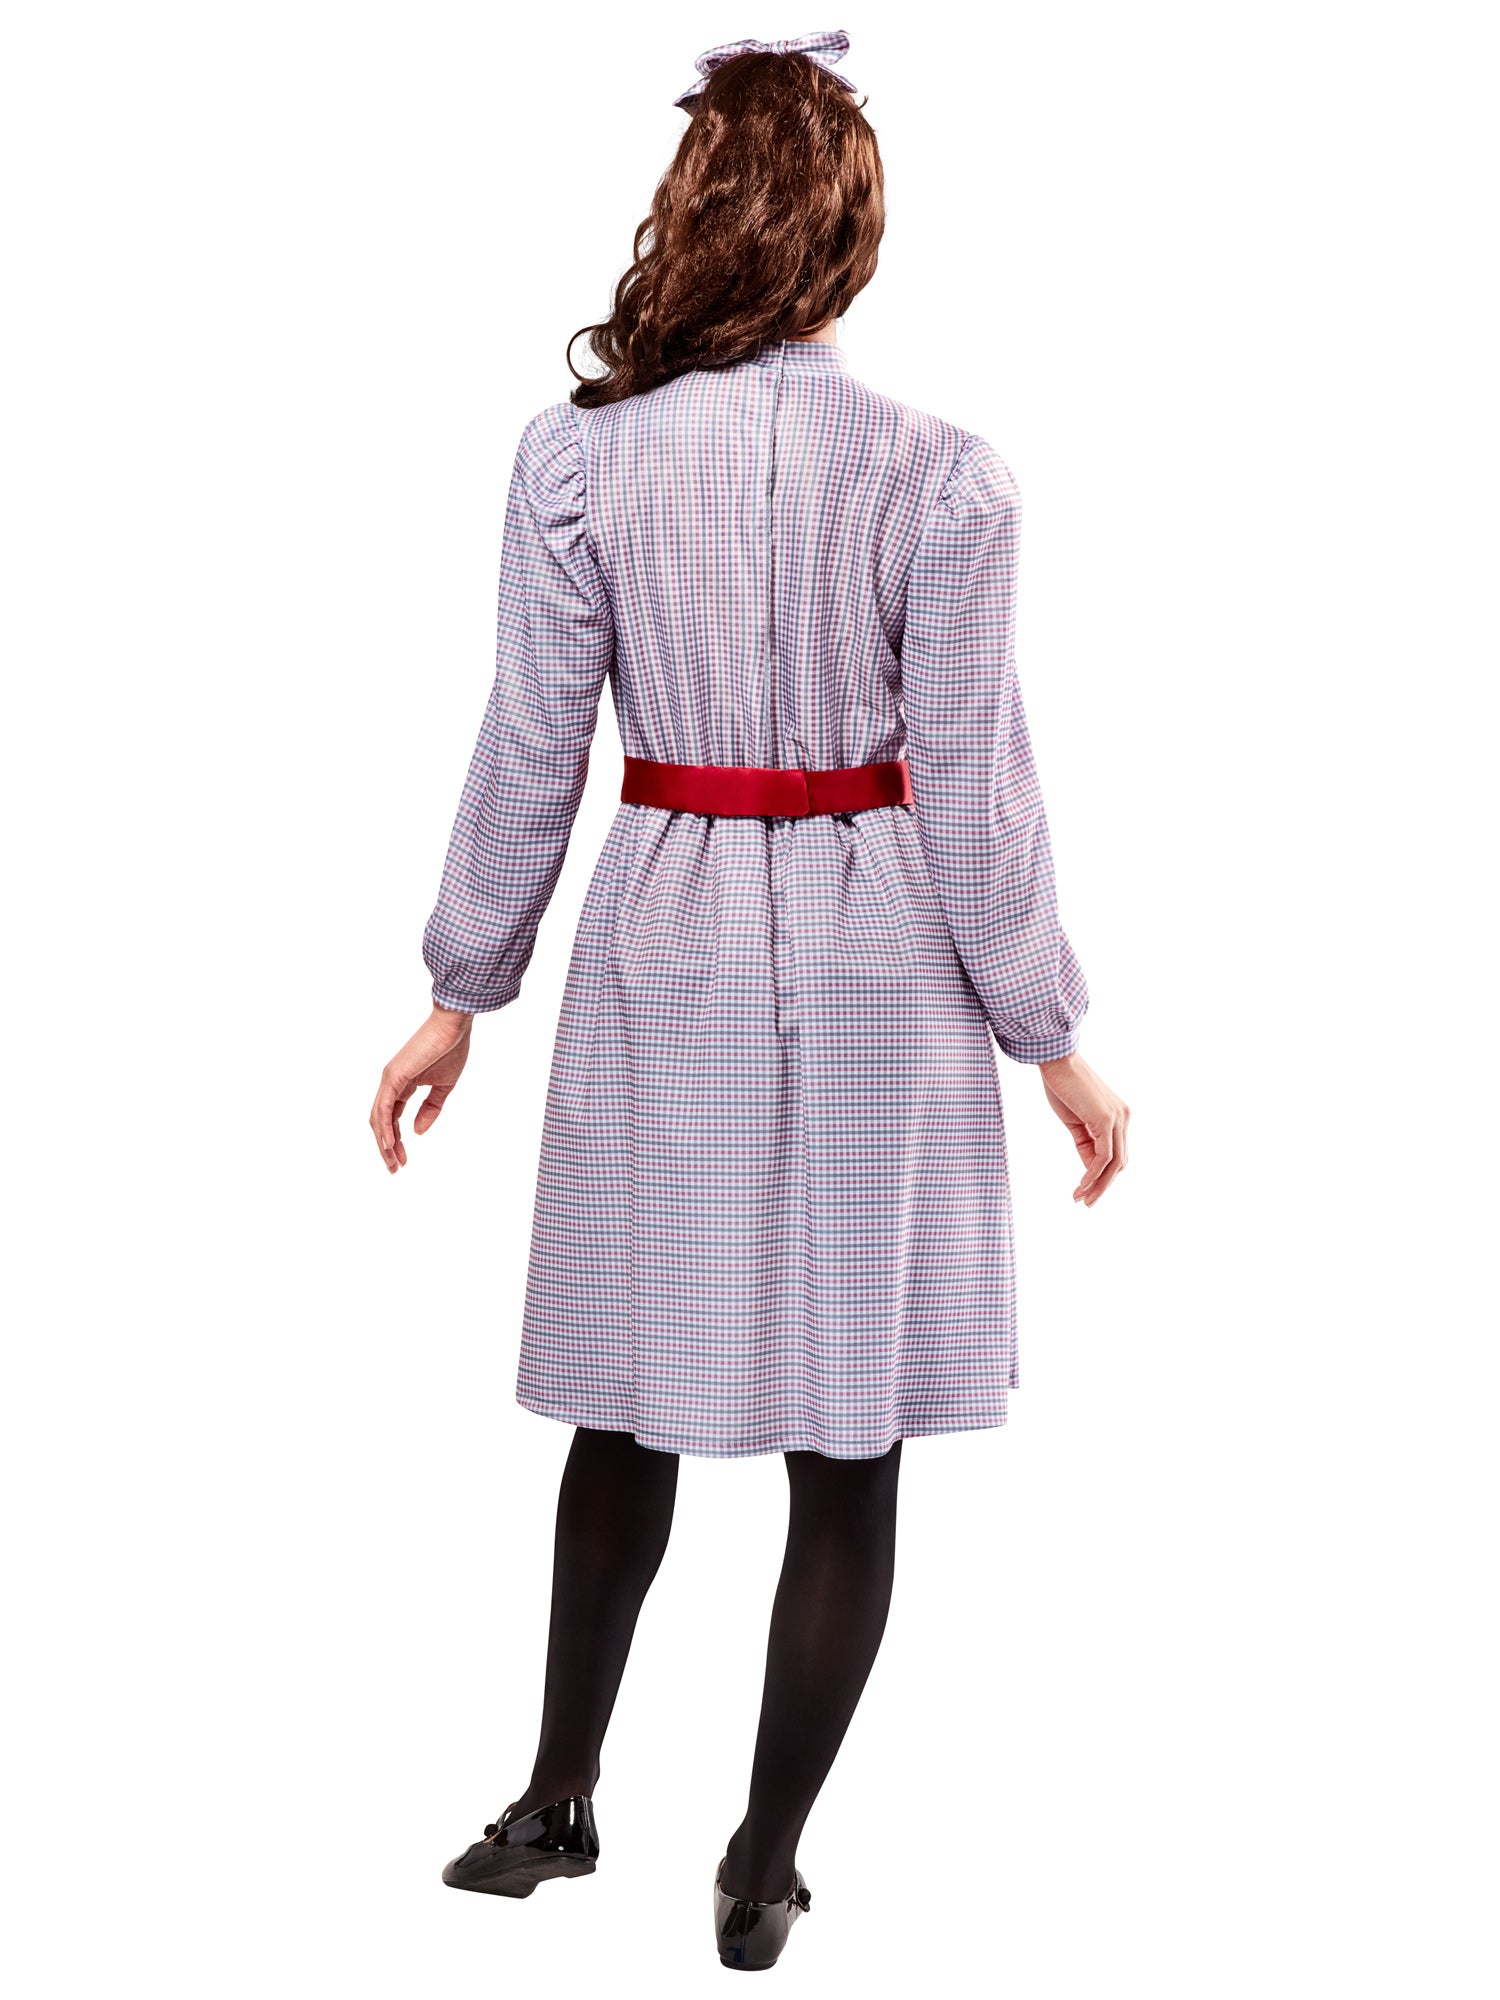 Women's American Girl Samantha Parkington Plaid Dress Costume Set - costumes.com